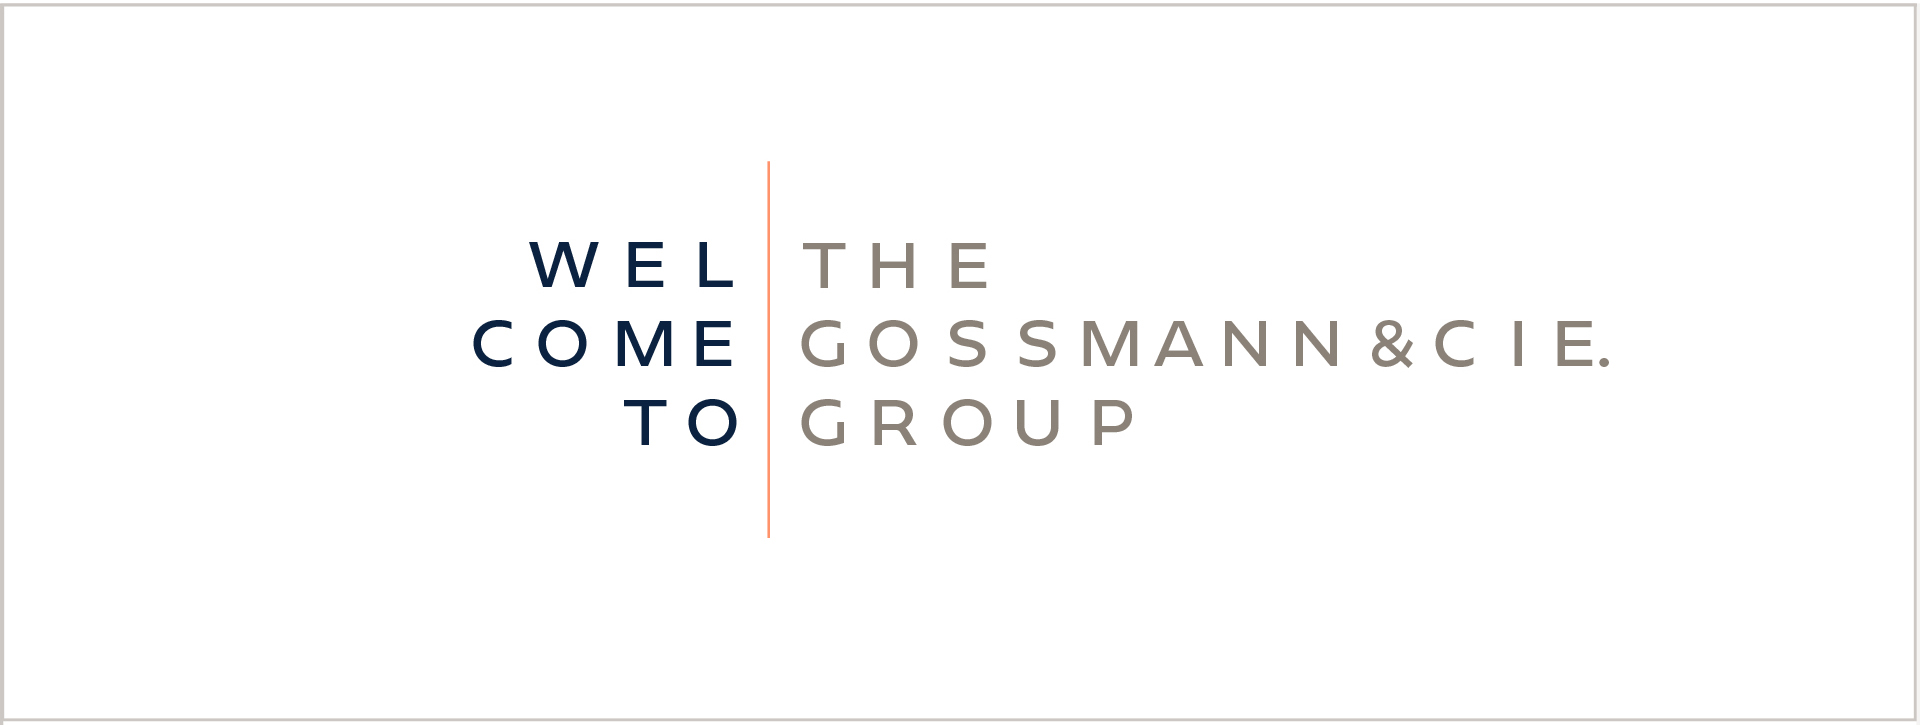 Gossmann&CEI Welcome